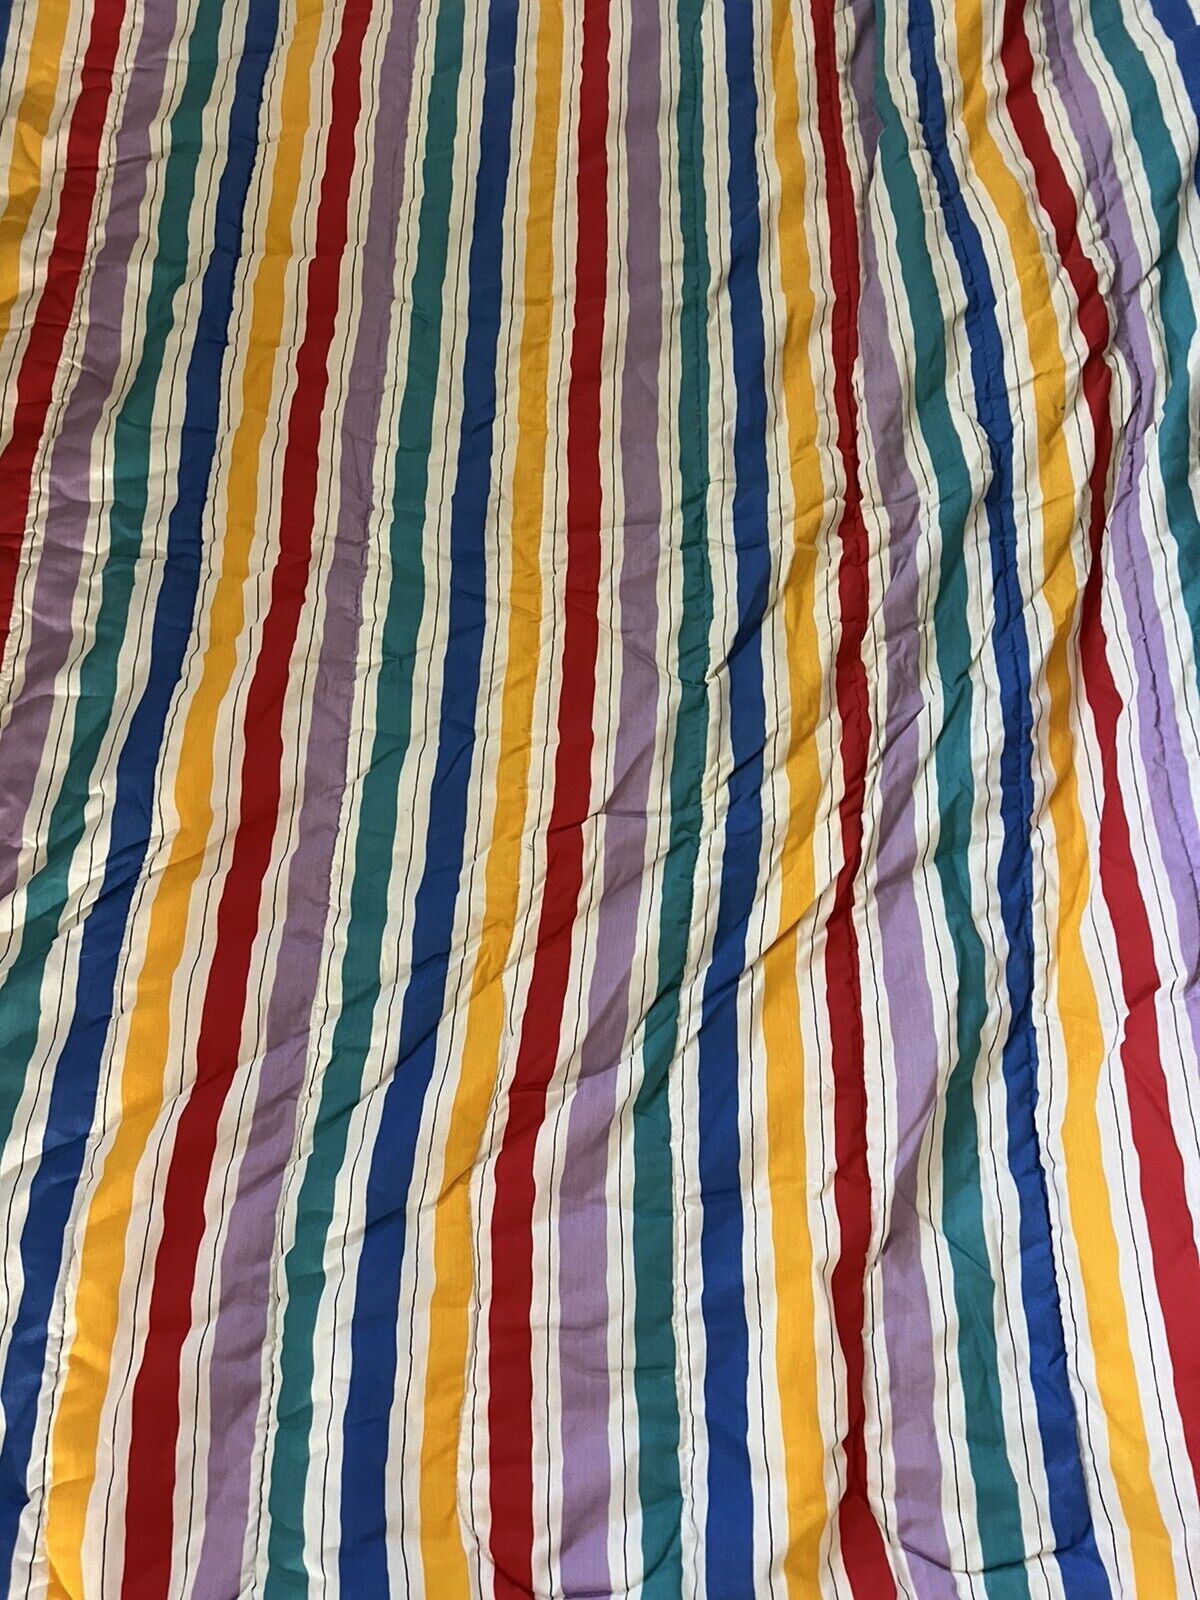 Springs Industries Quilt King  Bedspread Comforter Reversible Rainbow 101 X 86